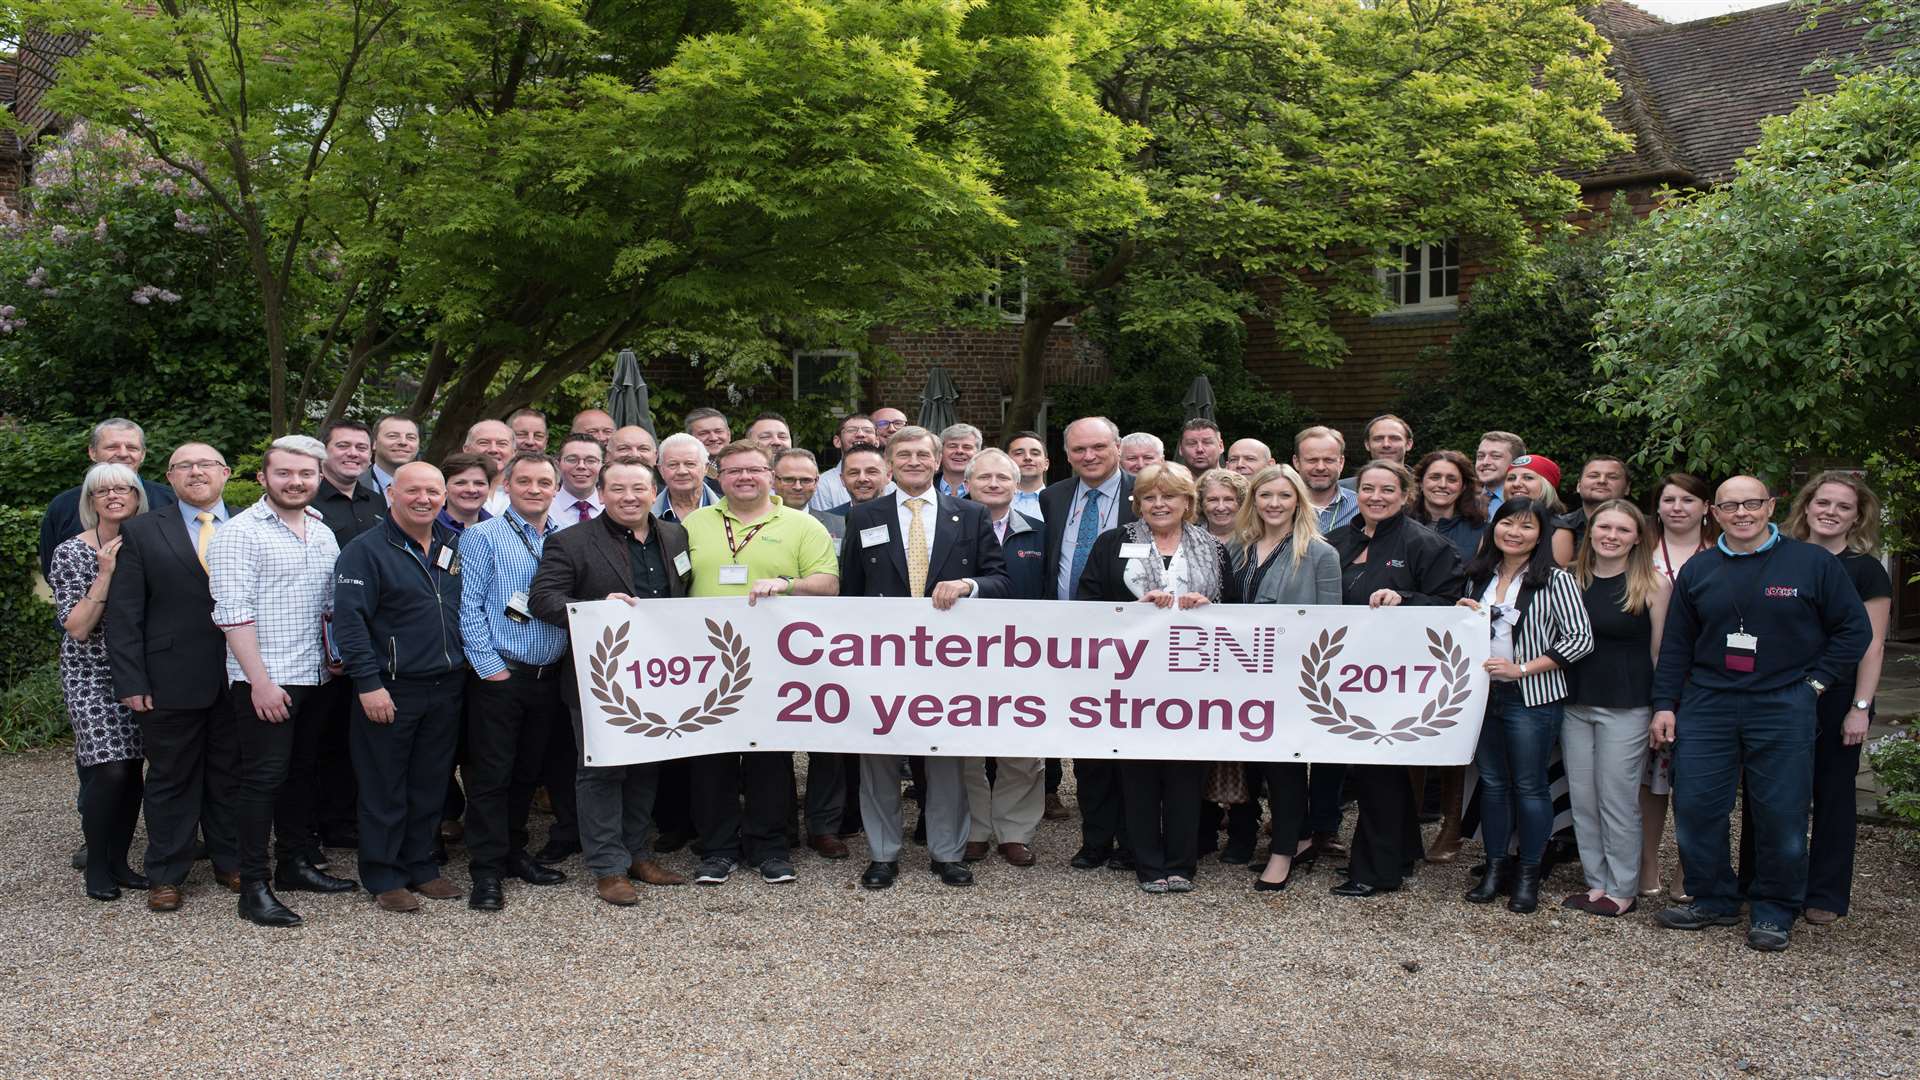 Canterbury BNI is celebrating its 20th anniversary. Picture: www.samanthajonesphotography.co.uk